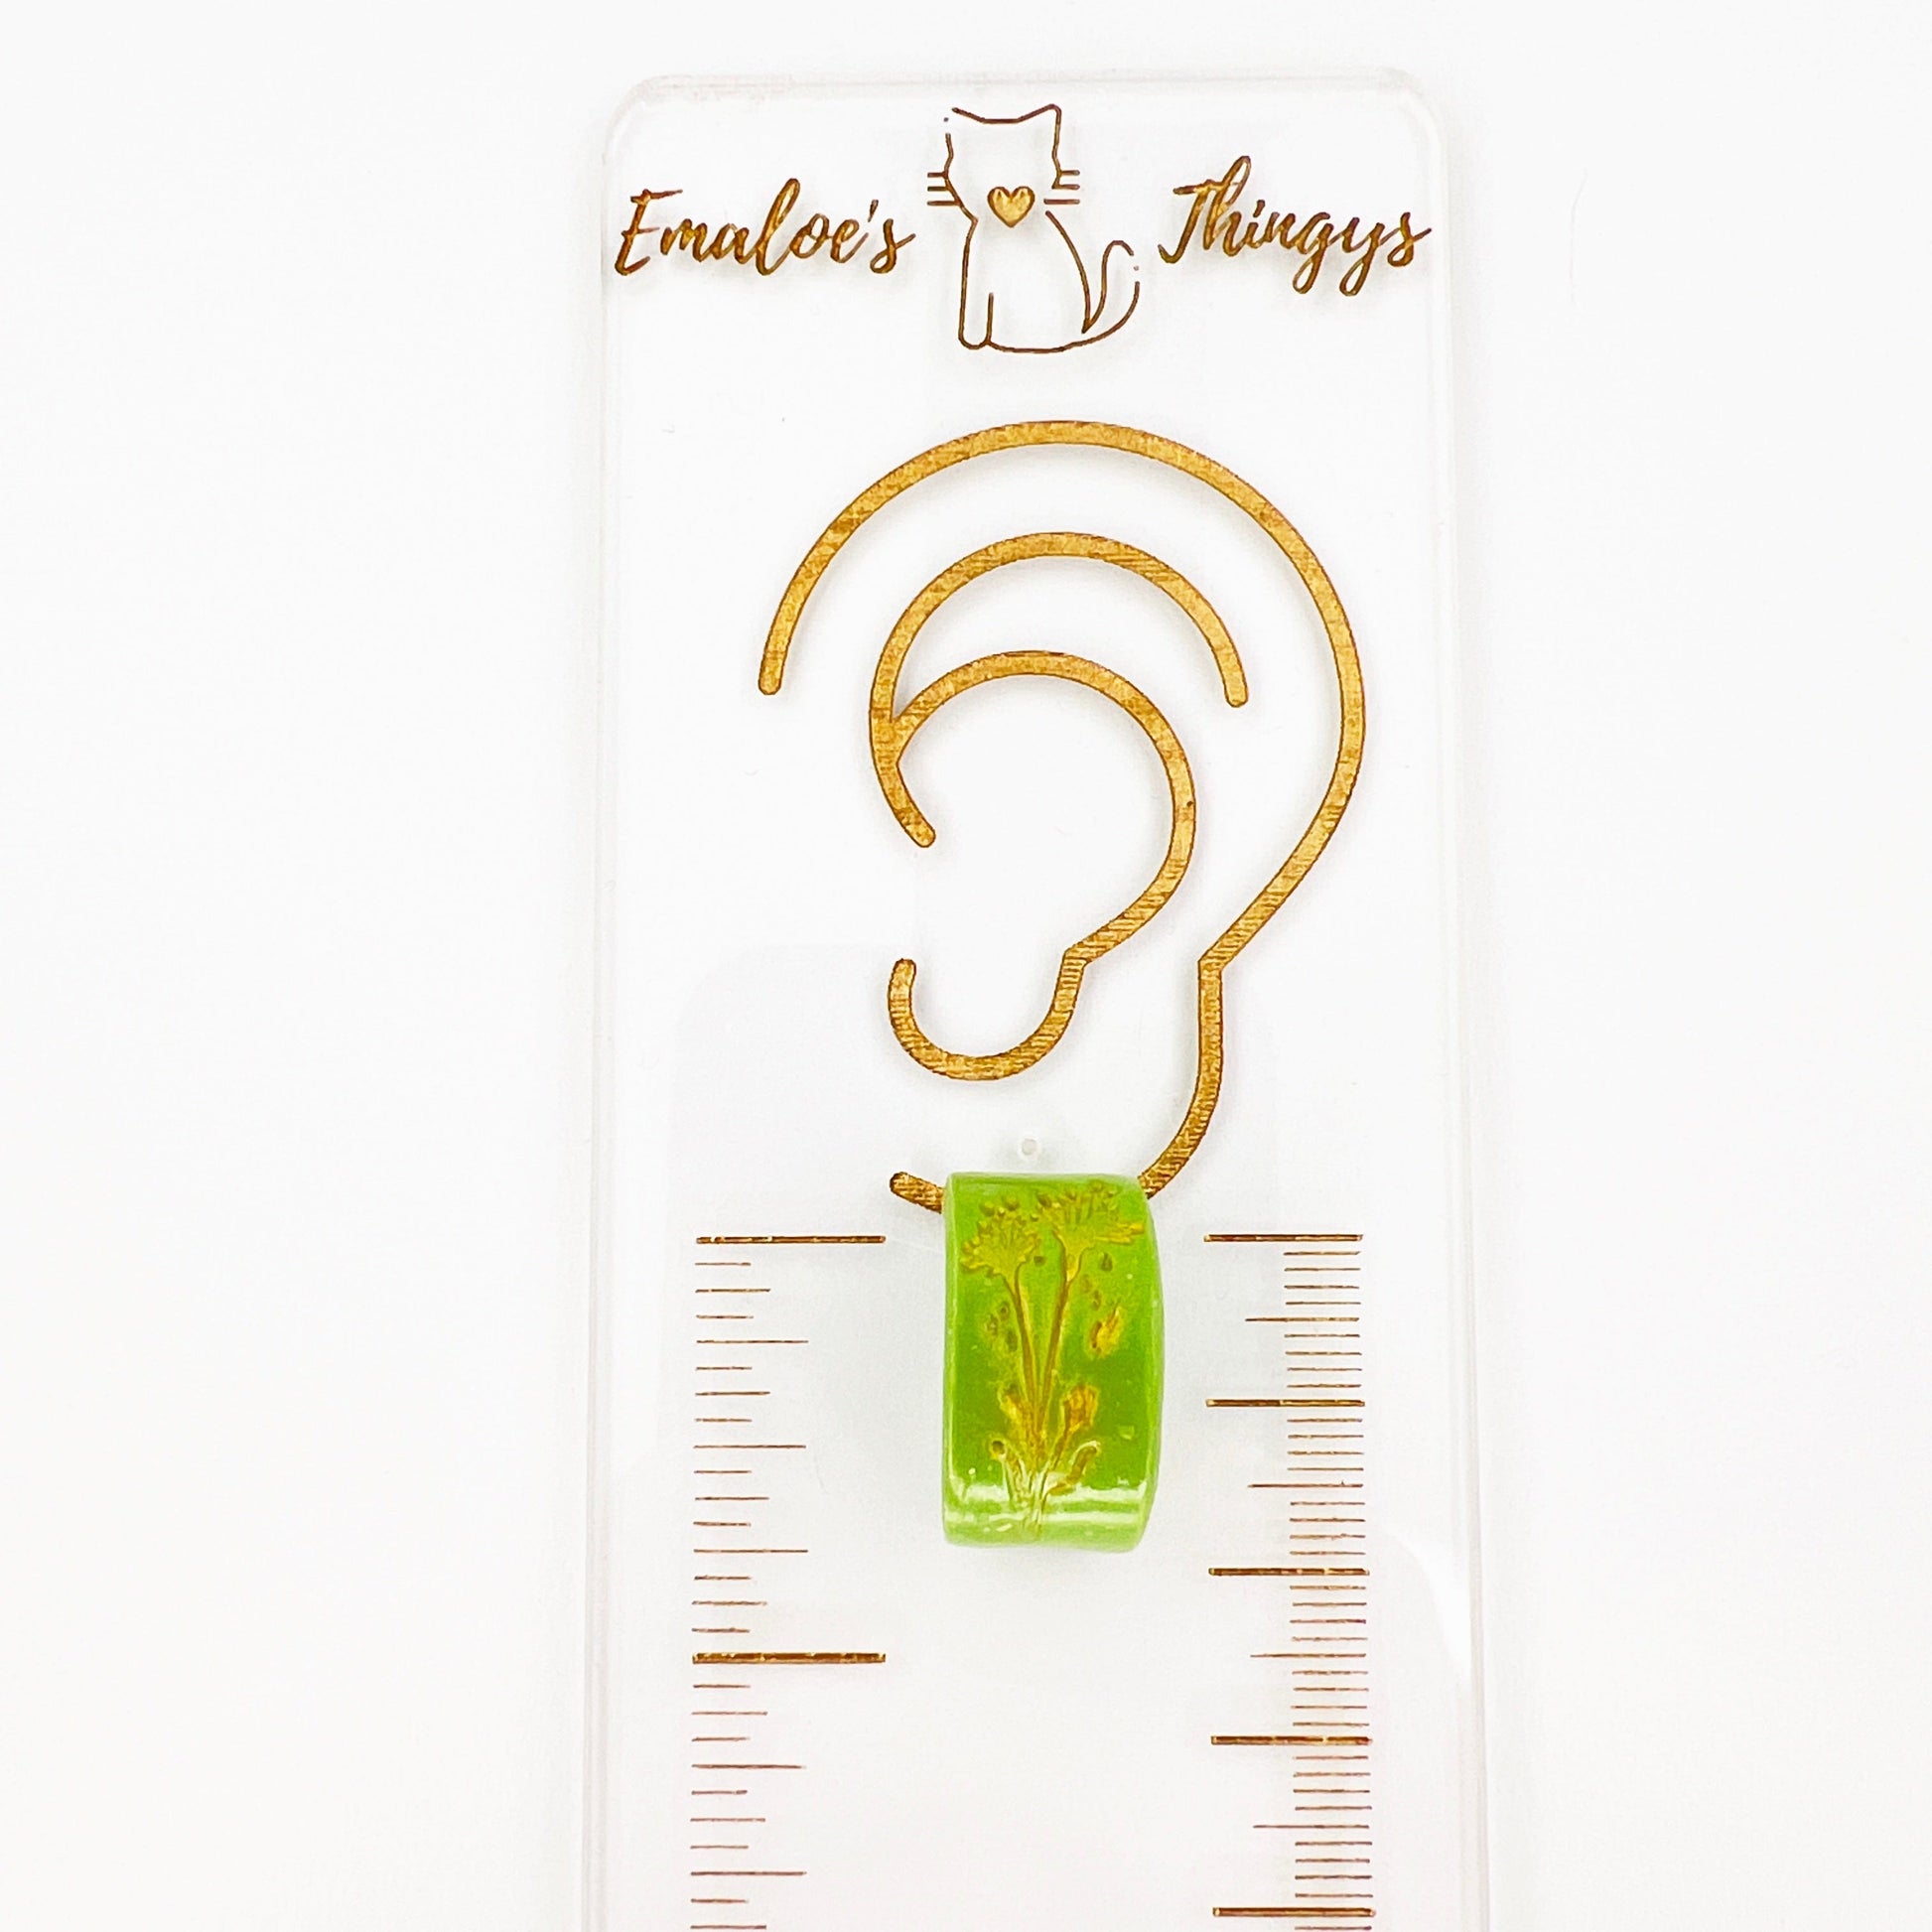 Earrings Green Floral Rectangle Mini Hoops (Huggies)